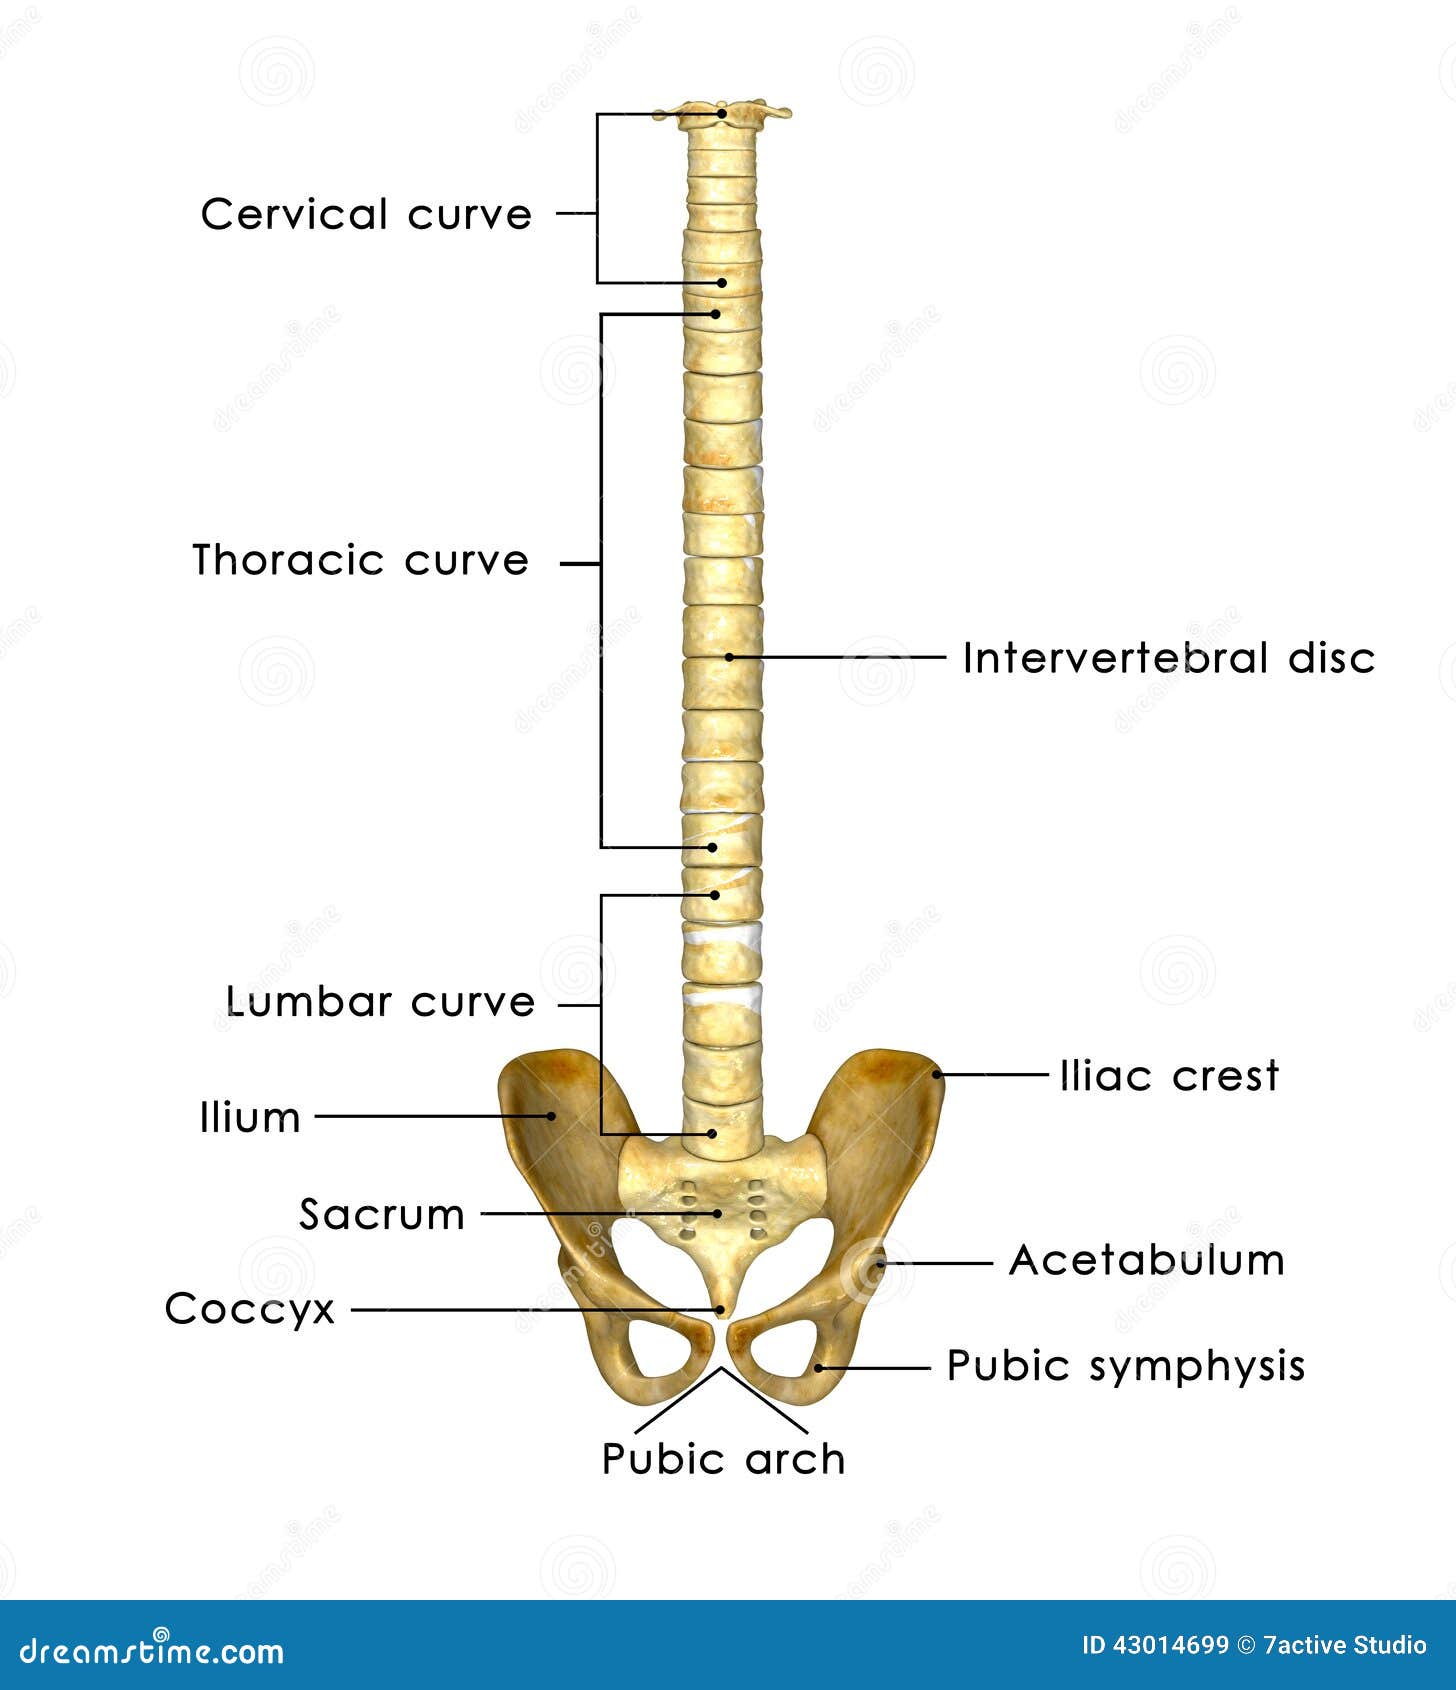 Female Abdominal Organs With Skeleton Stock Image | CartoonDealer.com